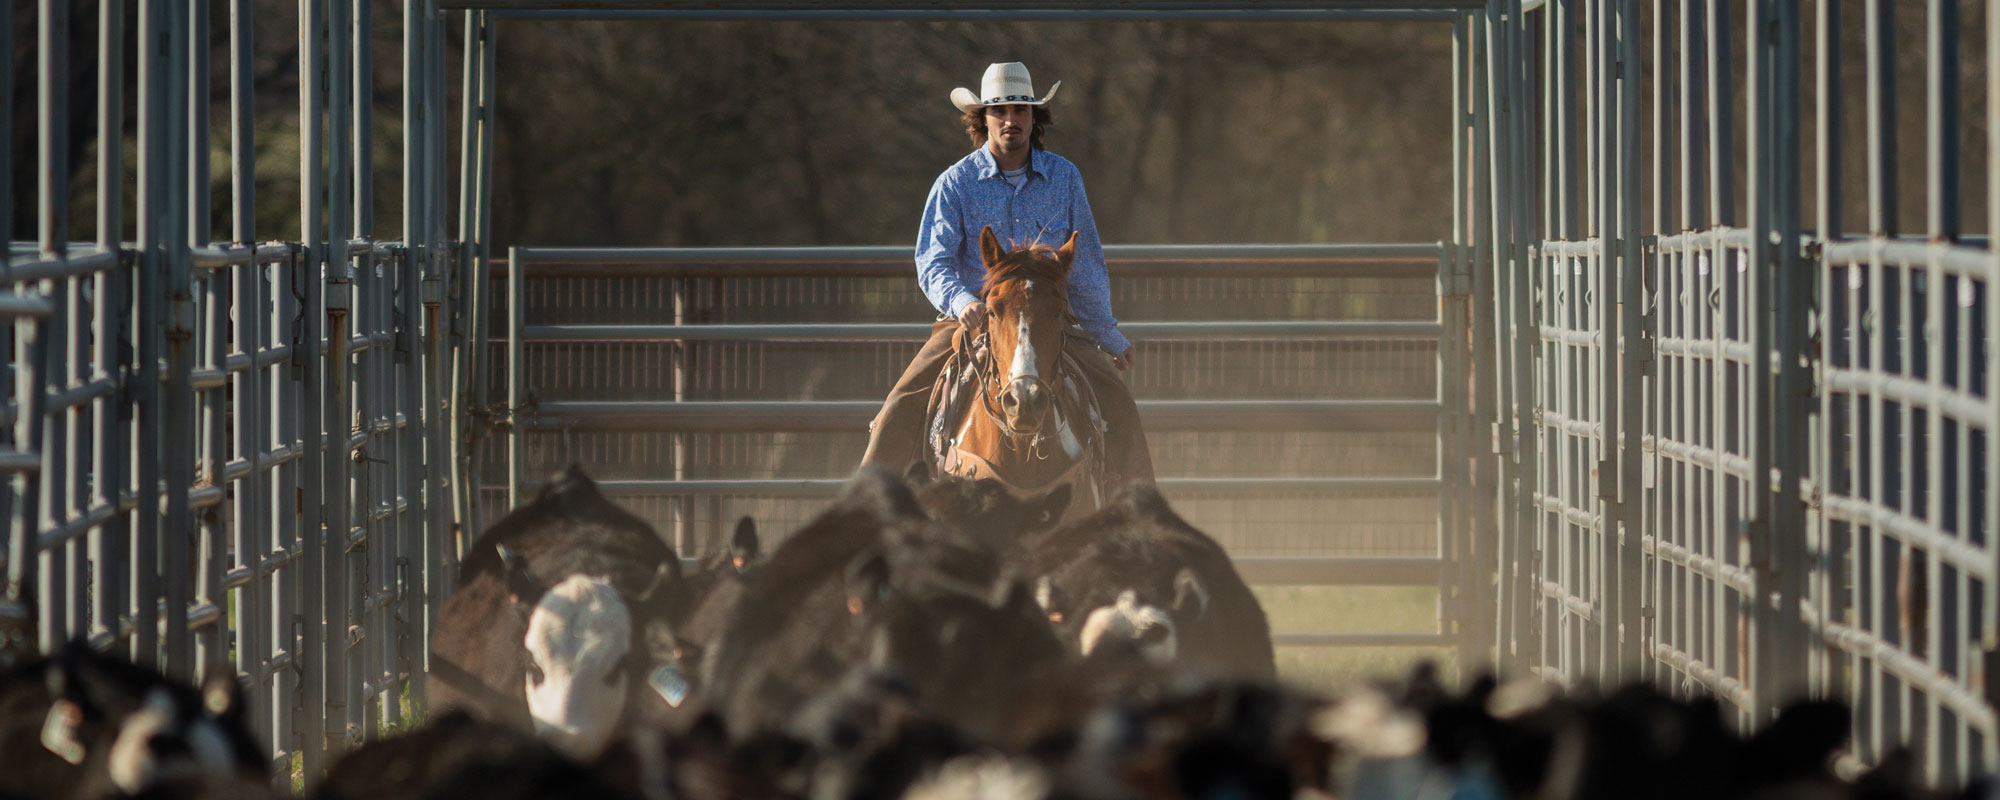 Rancher Frank Rhoades on horseback